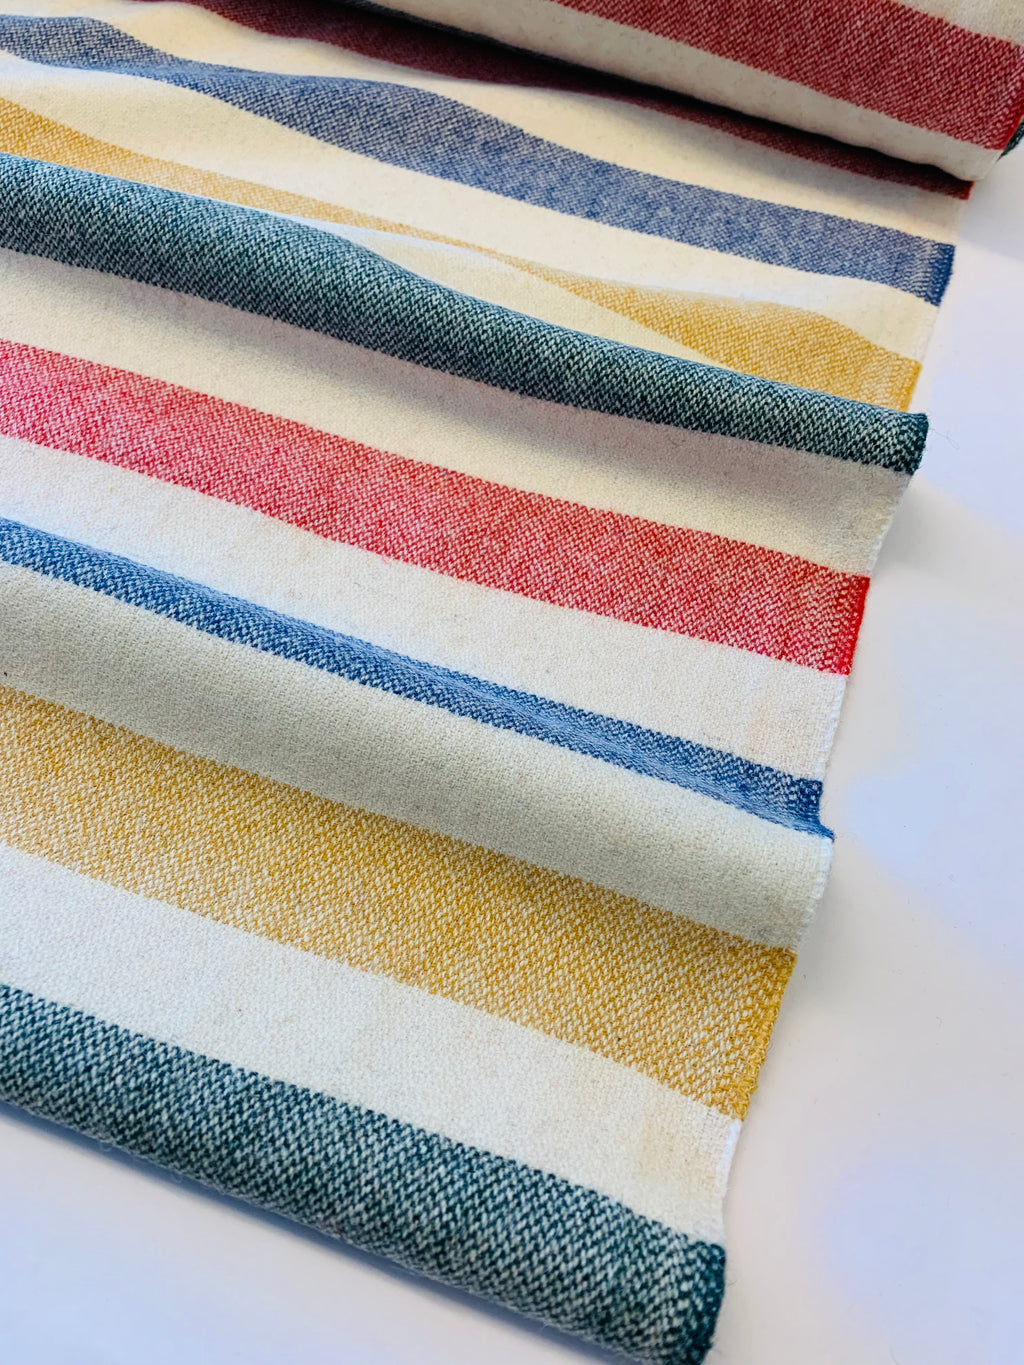 CHELSEA Stripe wool coating fabric